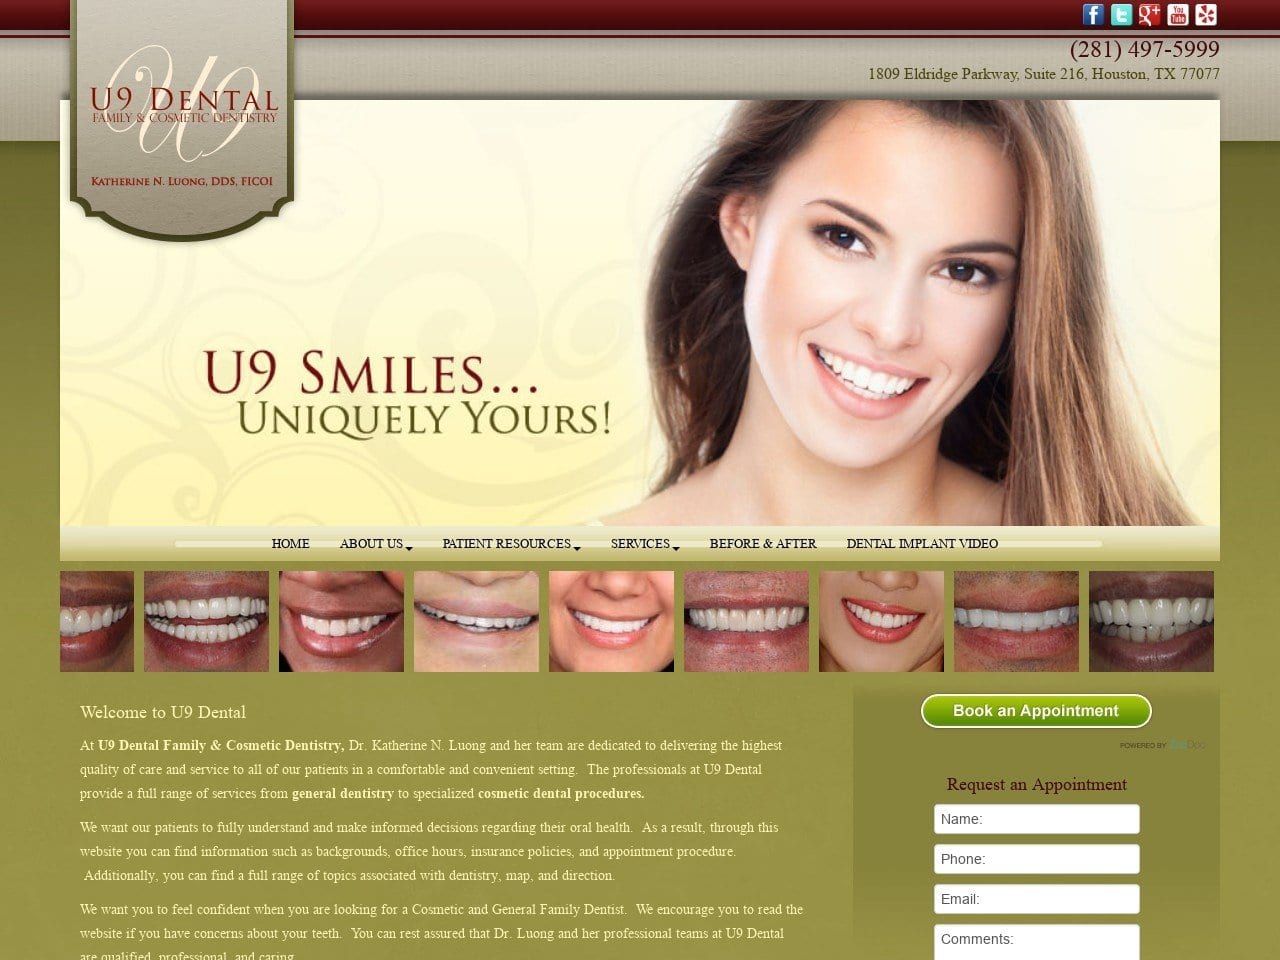 U9 Dental Family and Cosmetic Dentistry Website Screenshot from u9dental.com